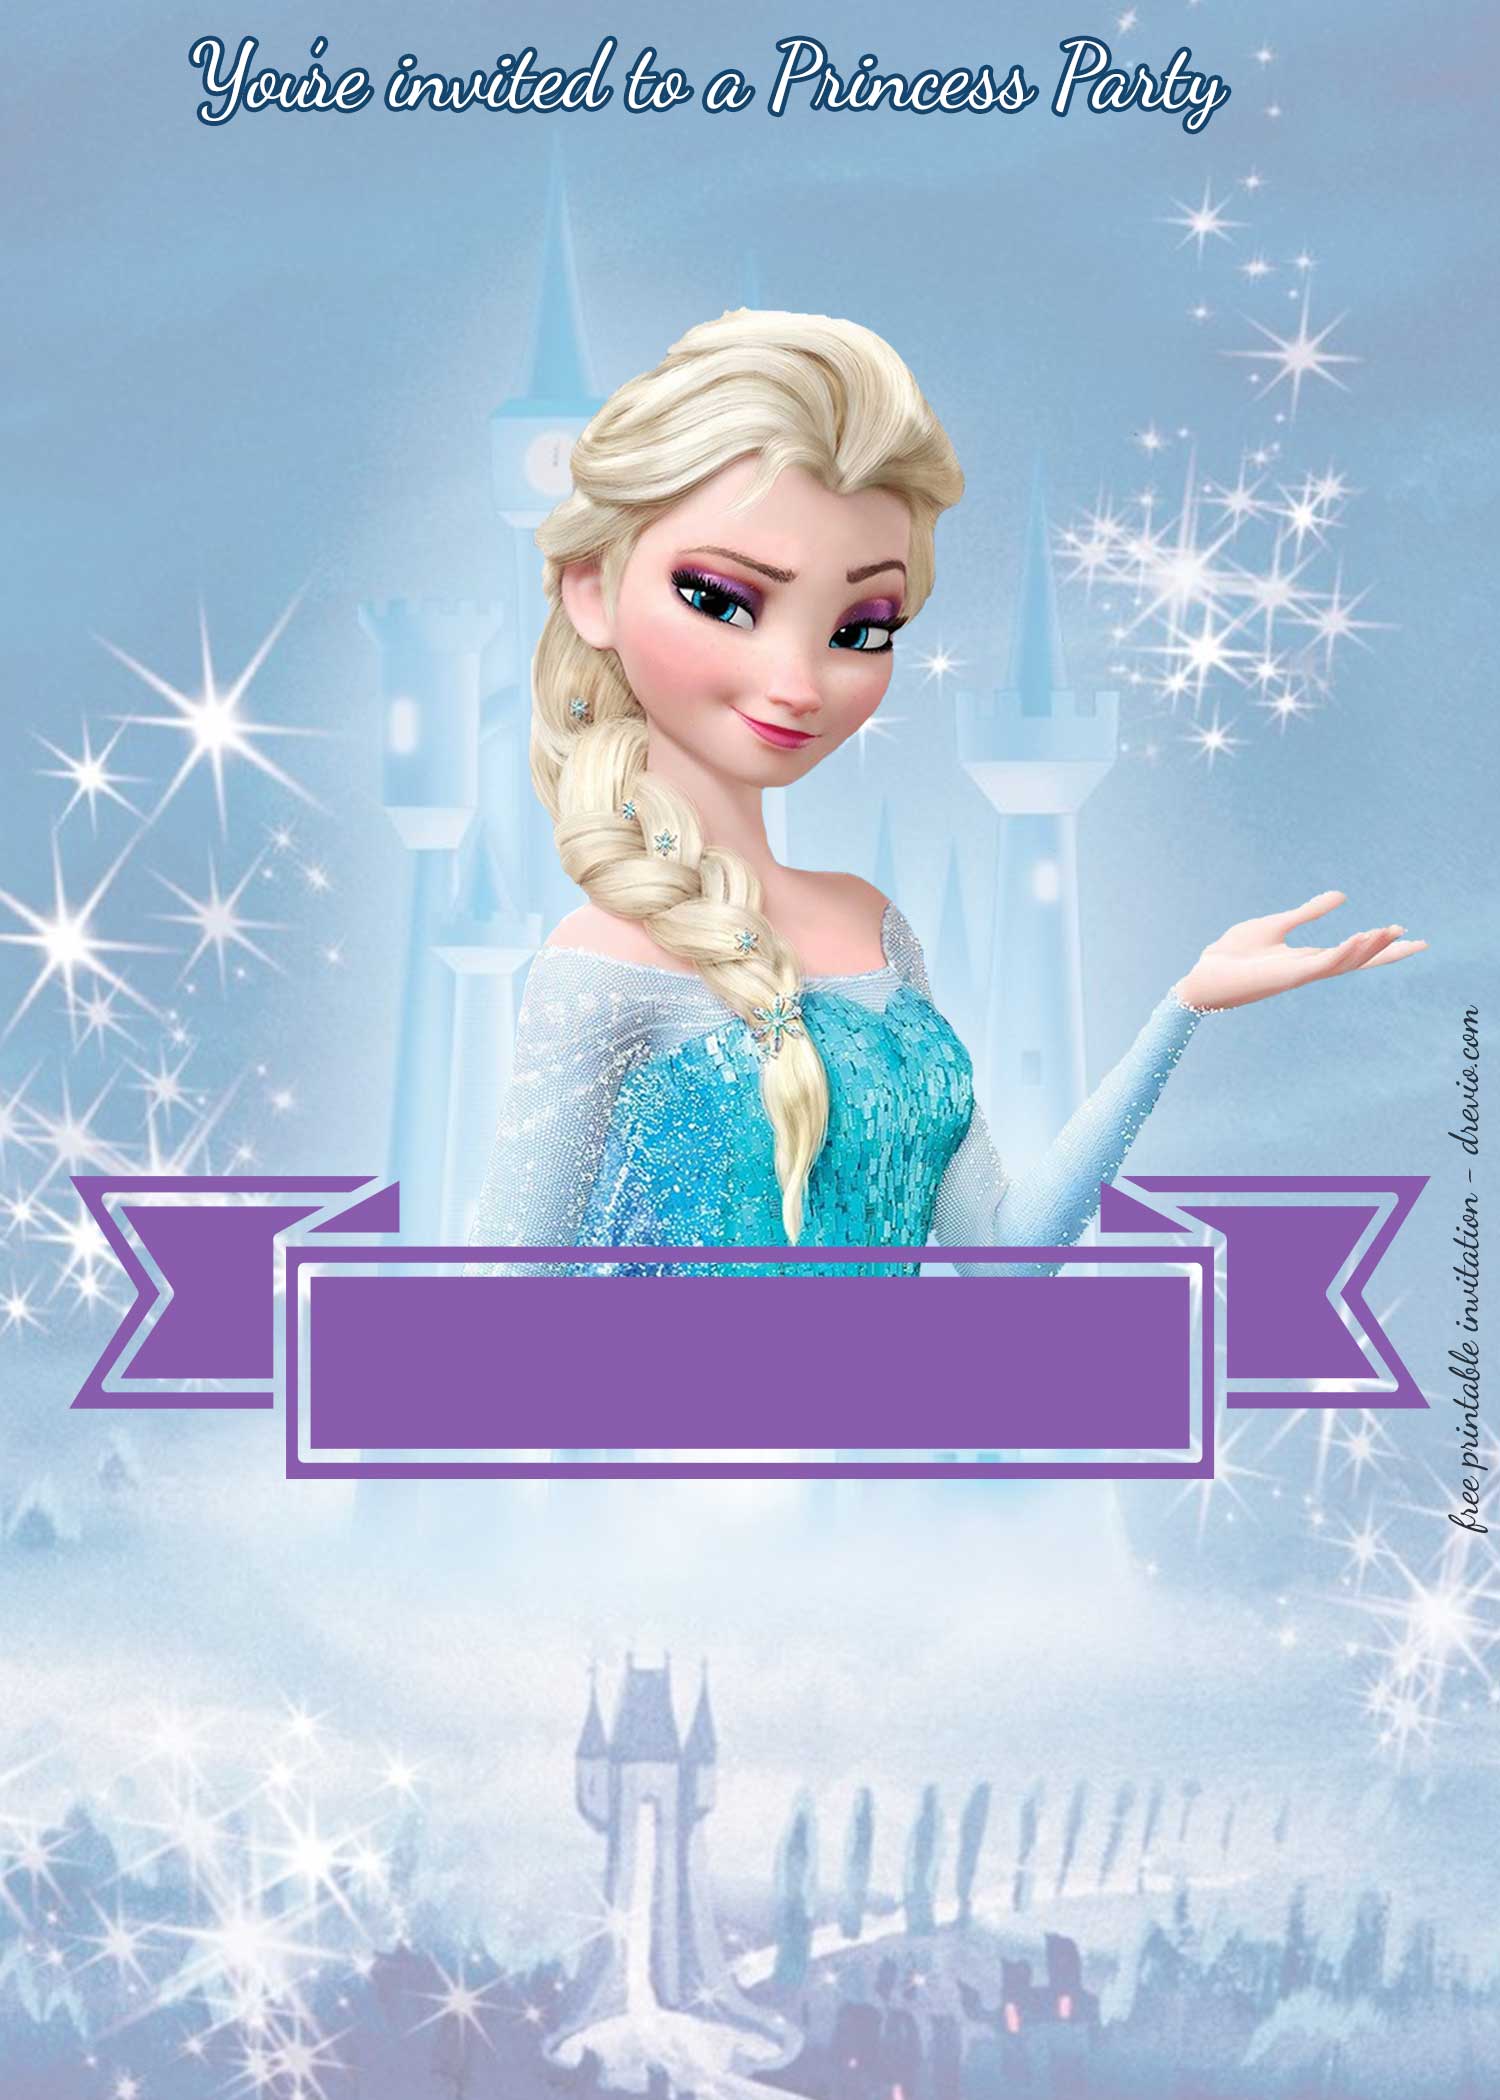 FREE-Princess-party-invitation—Princess-Elsa-Frozen-invitation-template